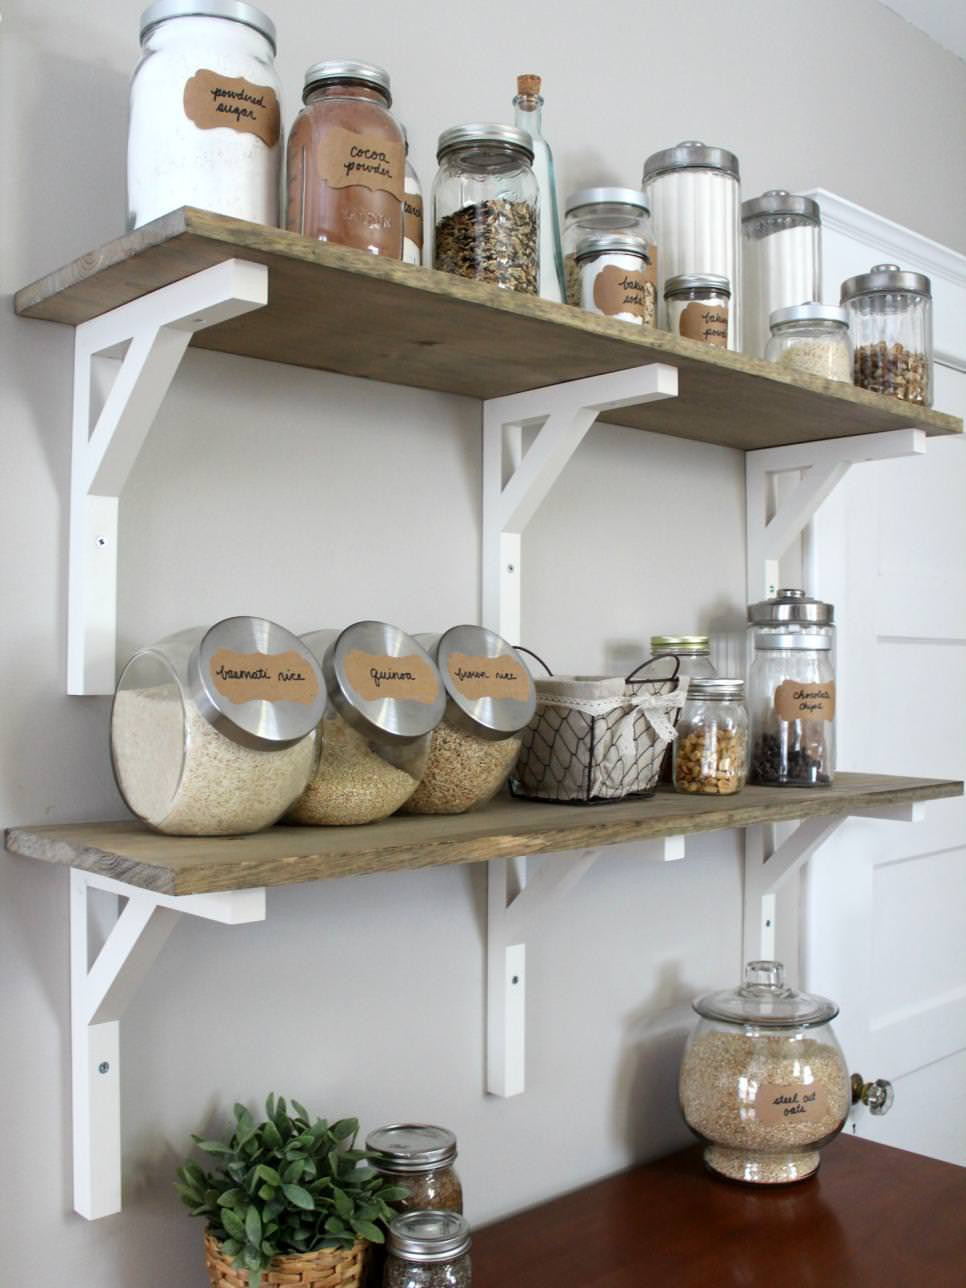 Best ideas about DIY Kitchen Shelf
. Save or Pin 23 DIY Shelves Furniture Designs Ideas Plans Now.